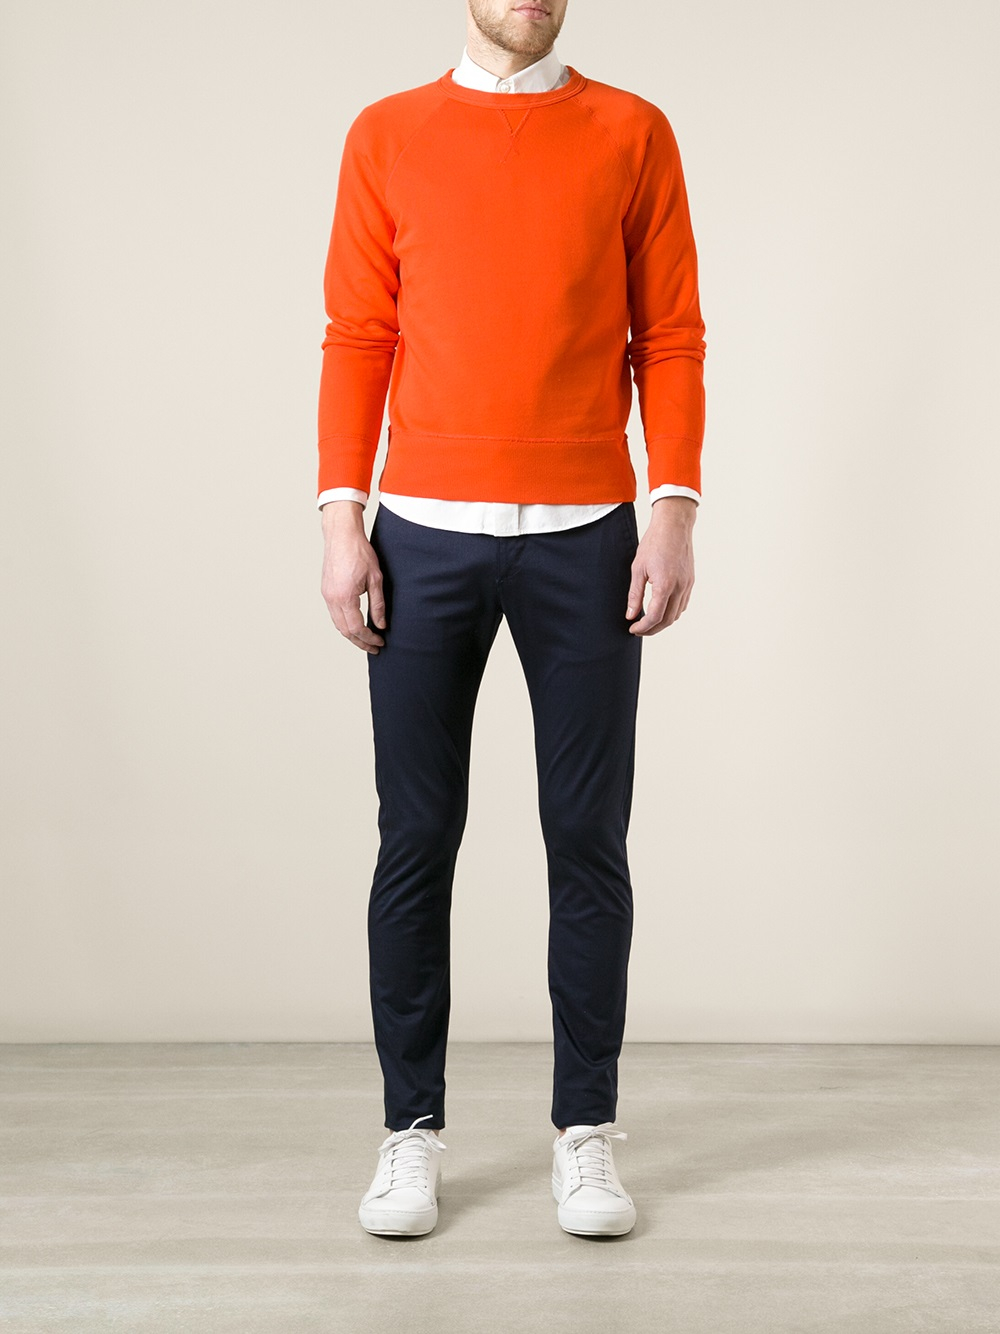 Acne Studios Classic Sweatshirt in Yellow & Orange (Orange) for Men - Lyst